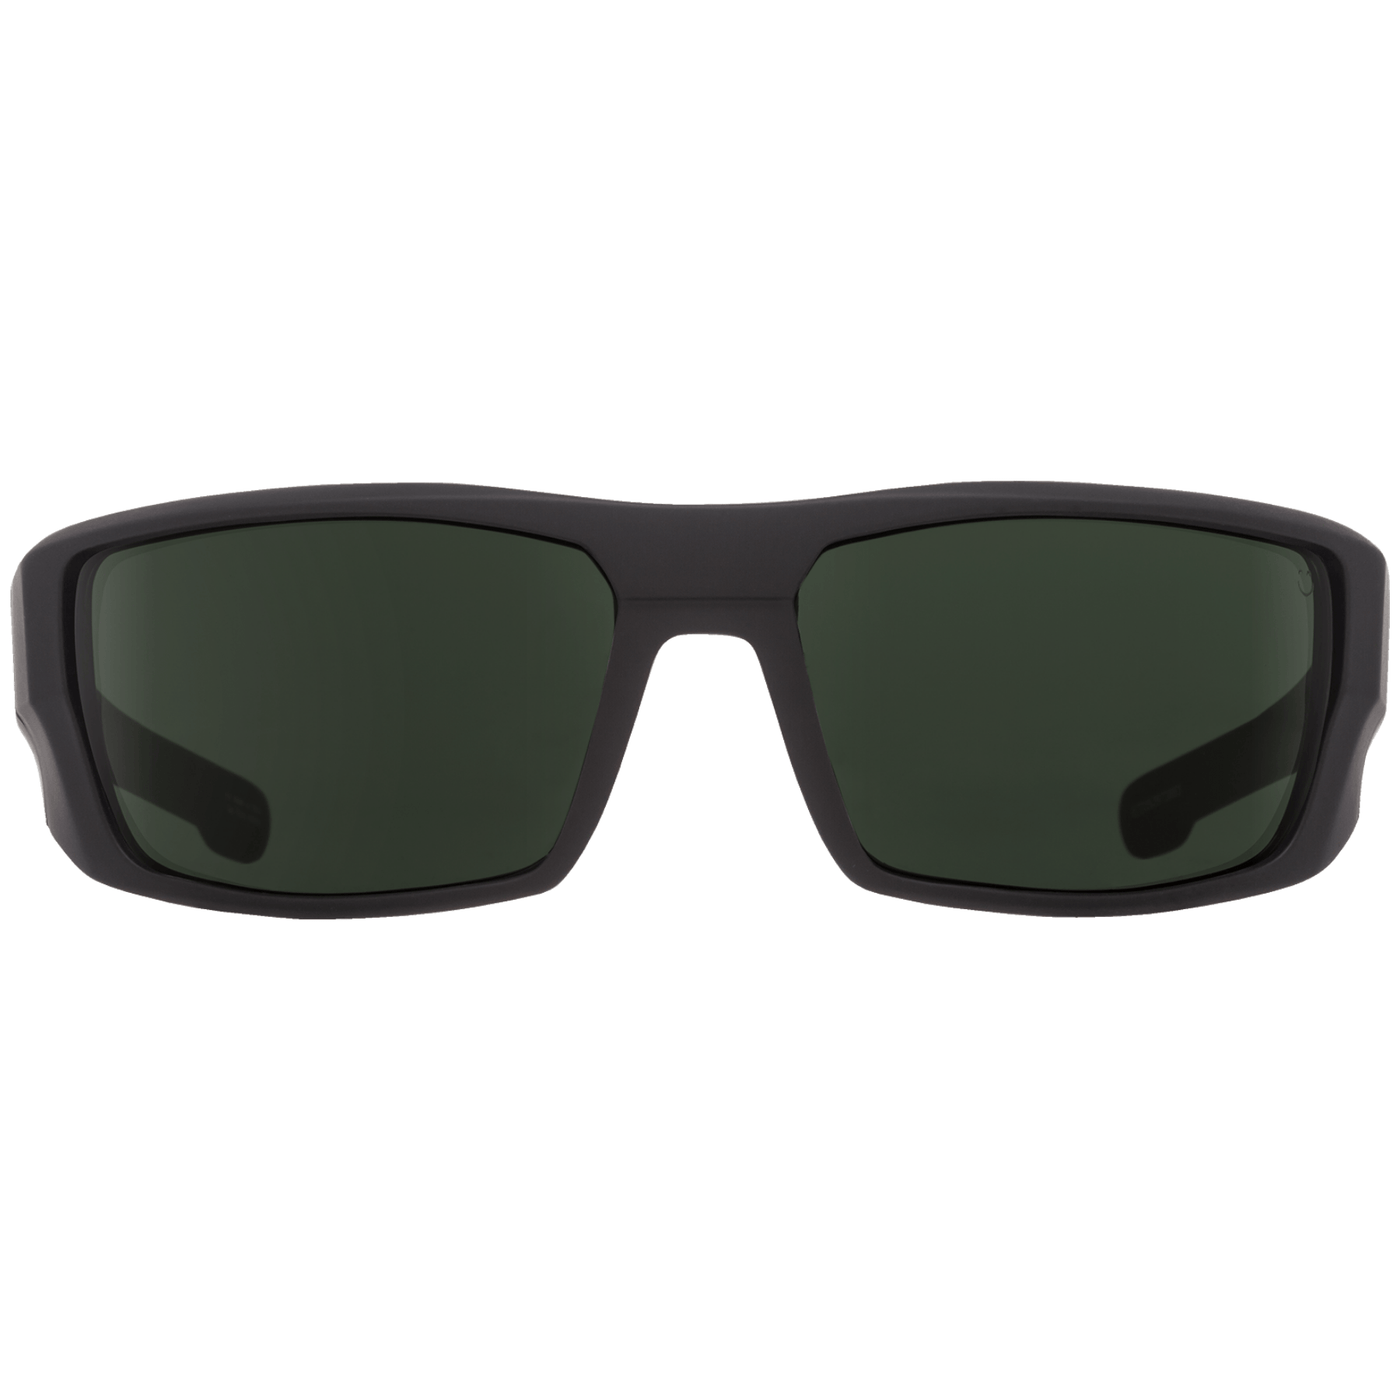 SPY DIRK Sunglasses, Happy Lens - Soft Matte Black 8Lines Shop - Fast Shipping